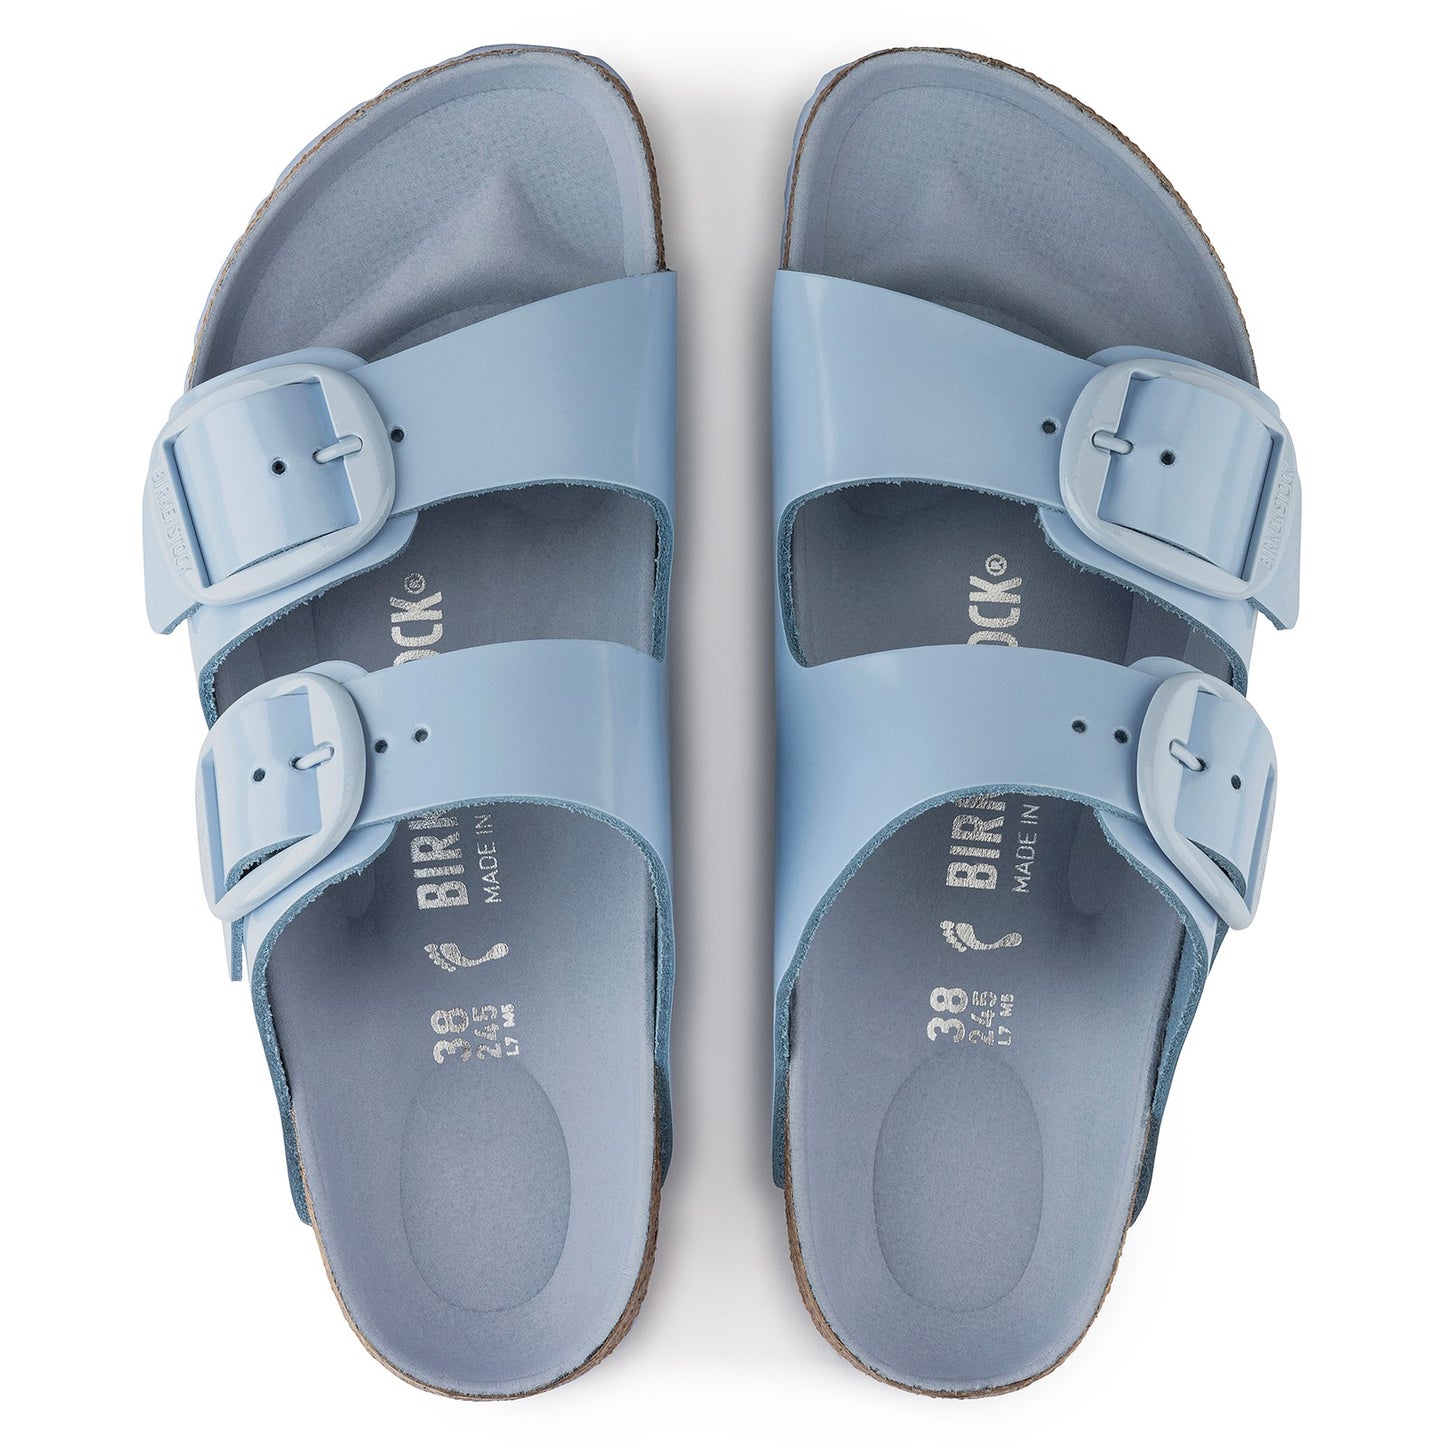 Peltz Shoes  Women's Birkenstock Arizona Big Buckle Sandal BLUE SHINE 1021 472 N